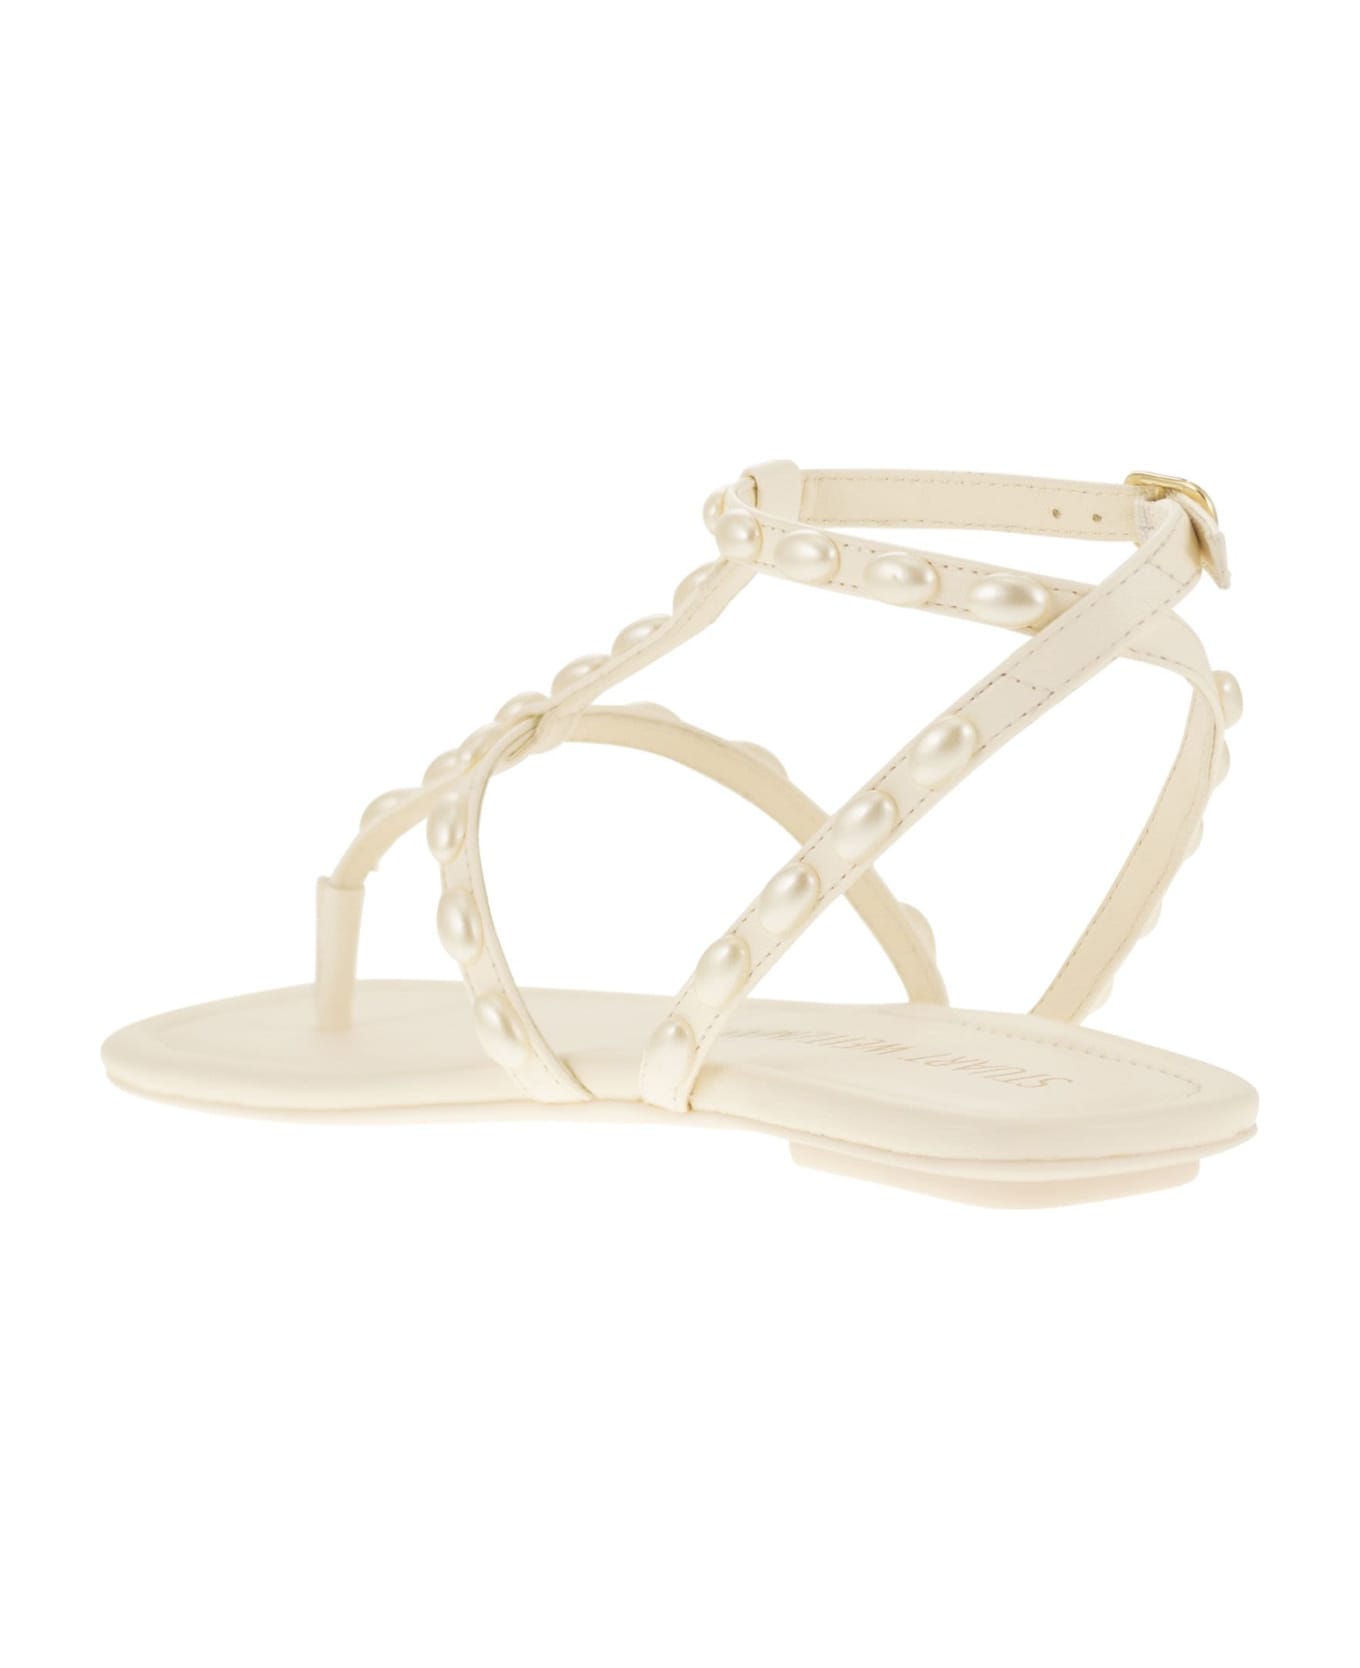 Stuart Weitzman Pearlita - Thong Sandal With Pearls - White